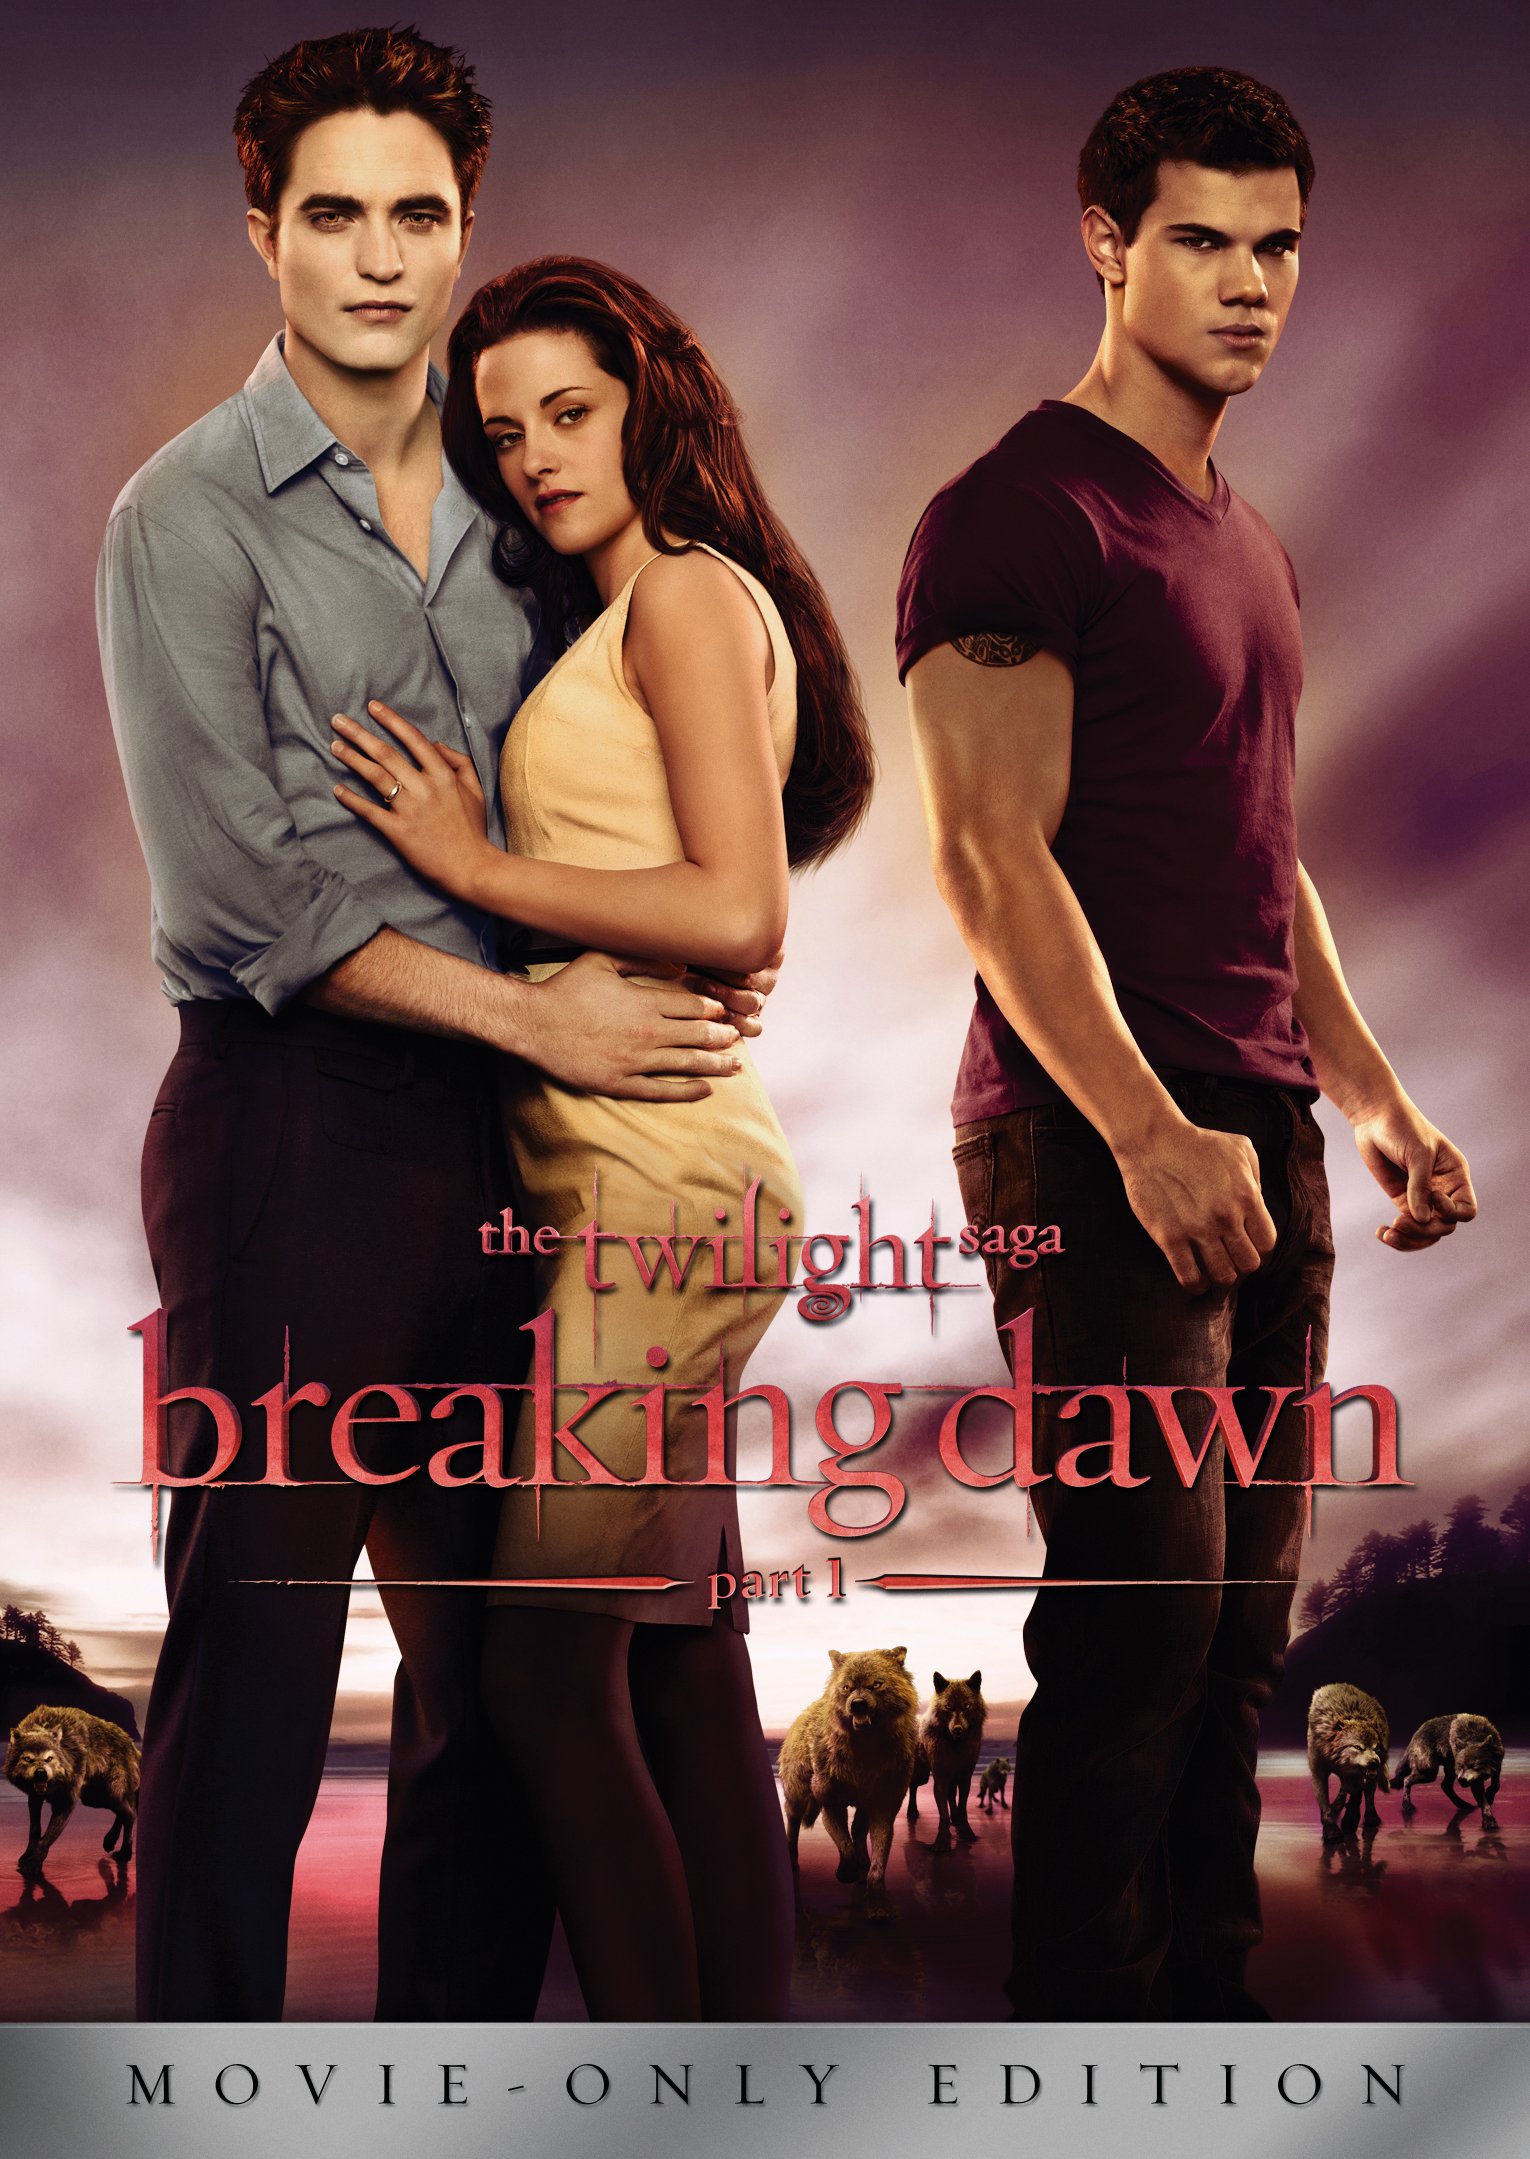 The Twilight Saga: Breaking Dawn - Part 1 HD wallpapers, Desktop wallpaper - most viewed